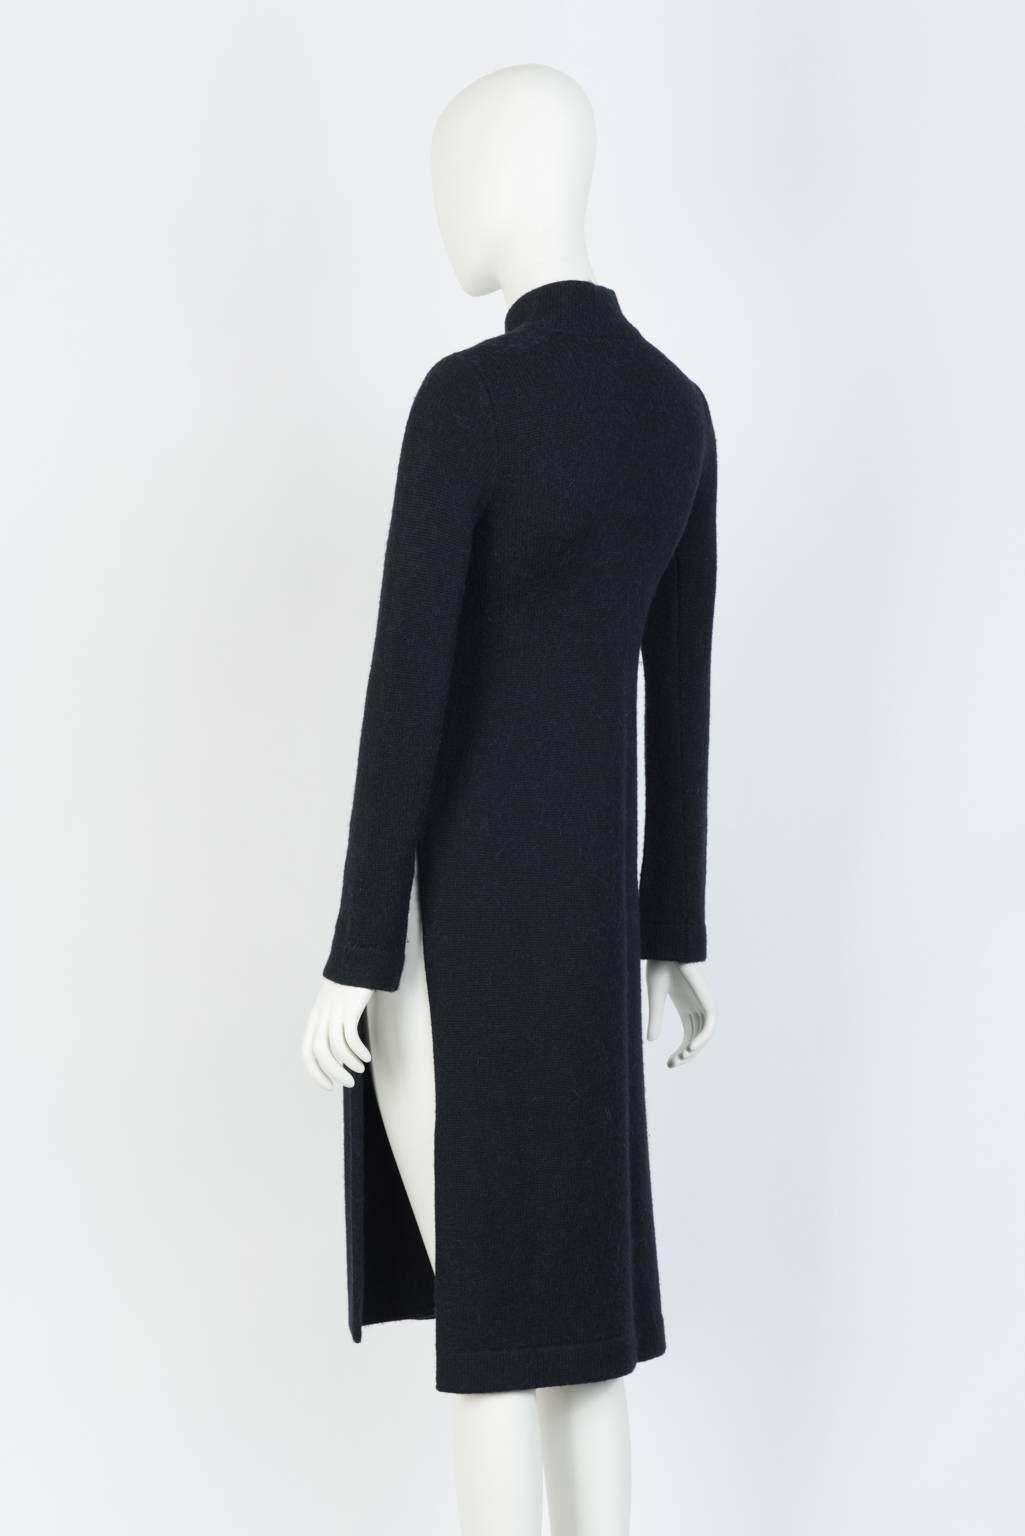 Ann Demeulemester Side Split Knit Tunic Coat In Excellent Condition For Sale In Xiamen, Fujian